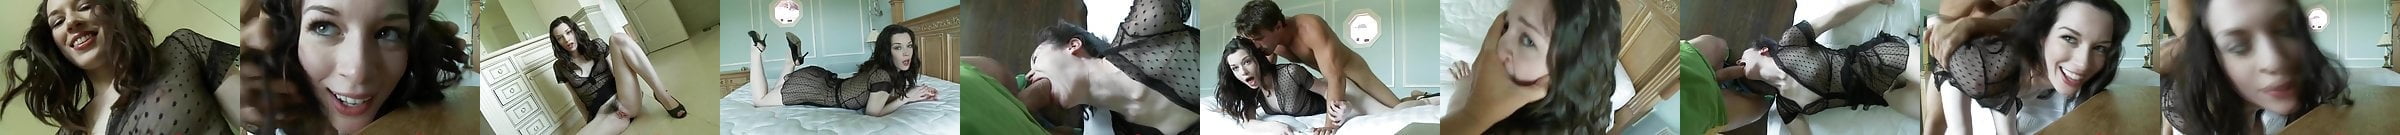 Stoya Free Porn Star Videos 64 Xhamster